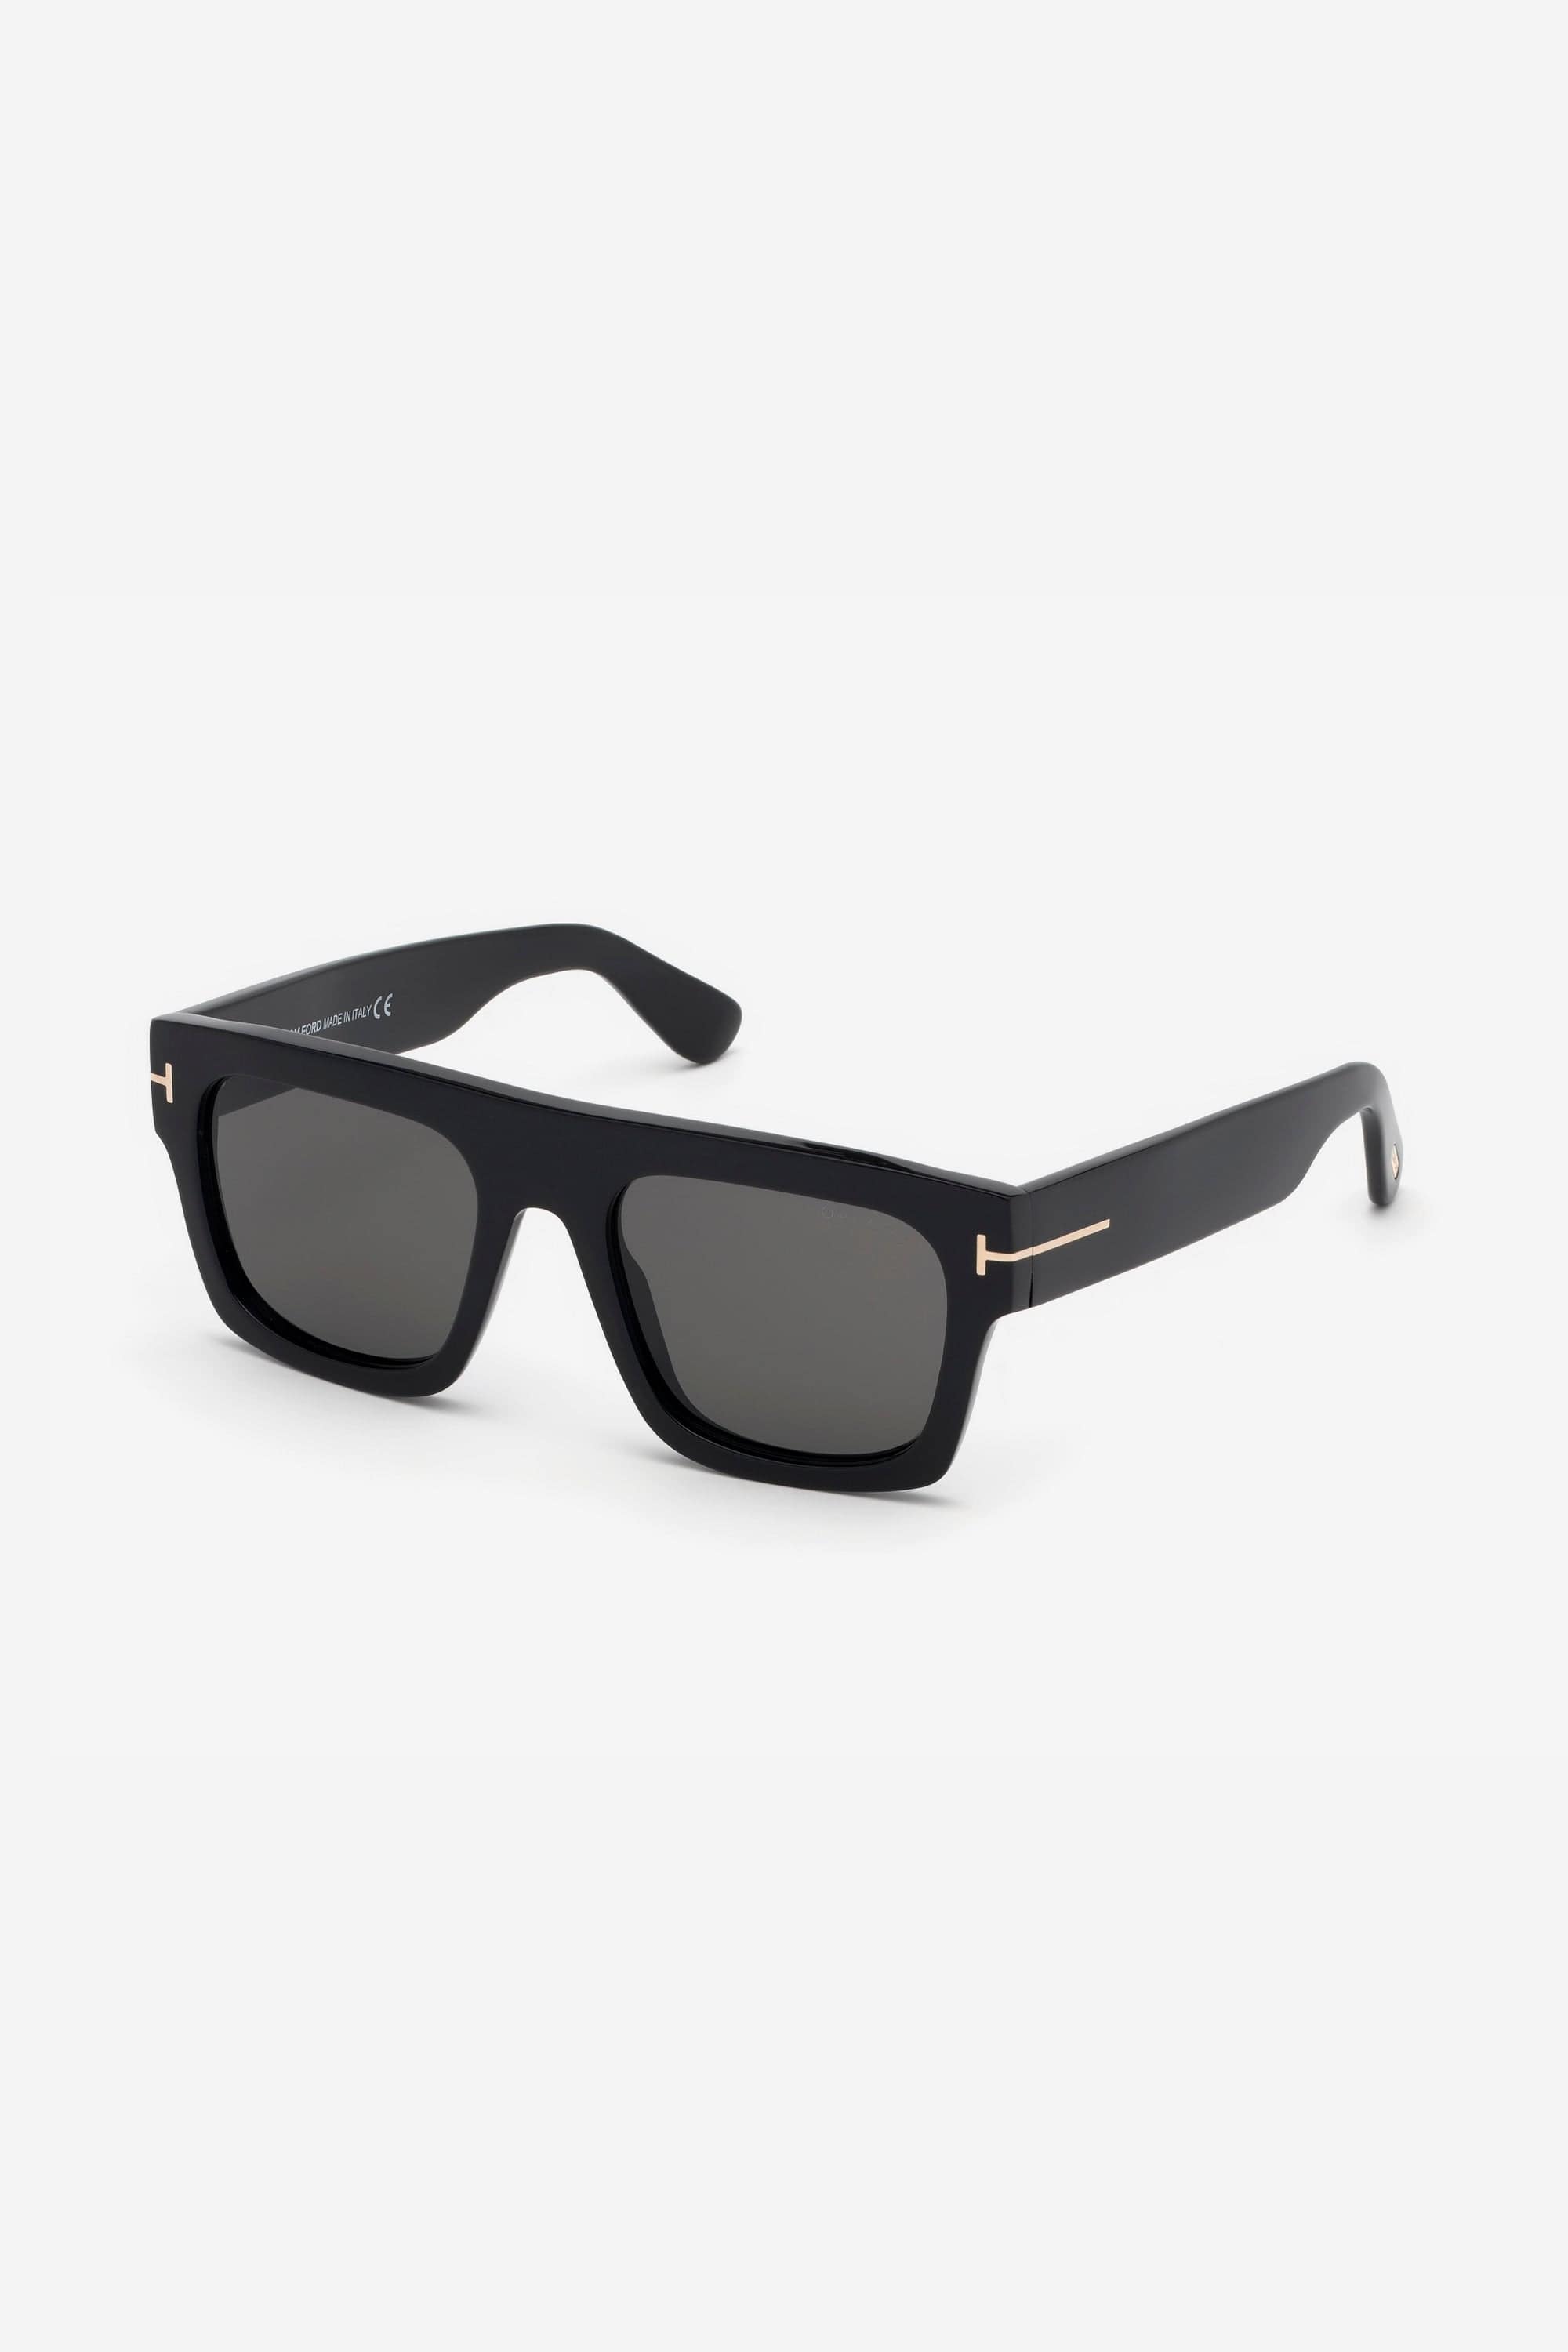 Tom Ford iconic Fausto sunglasses in black - Eyewear Club